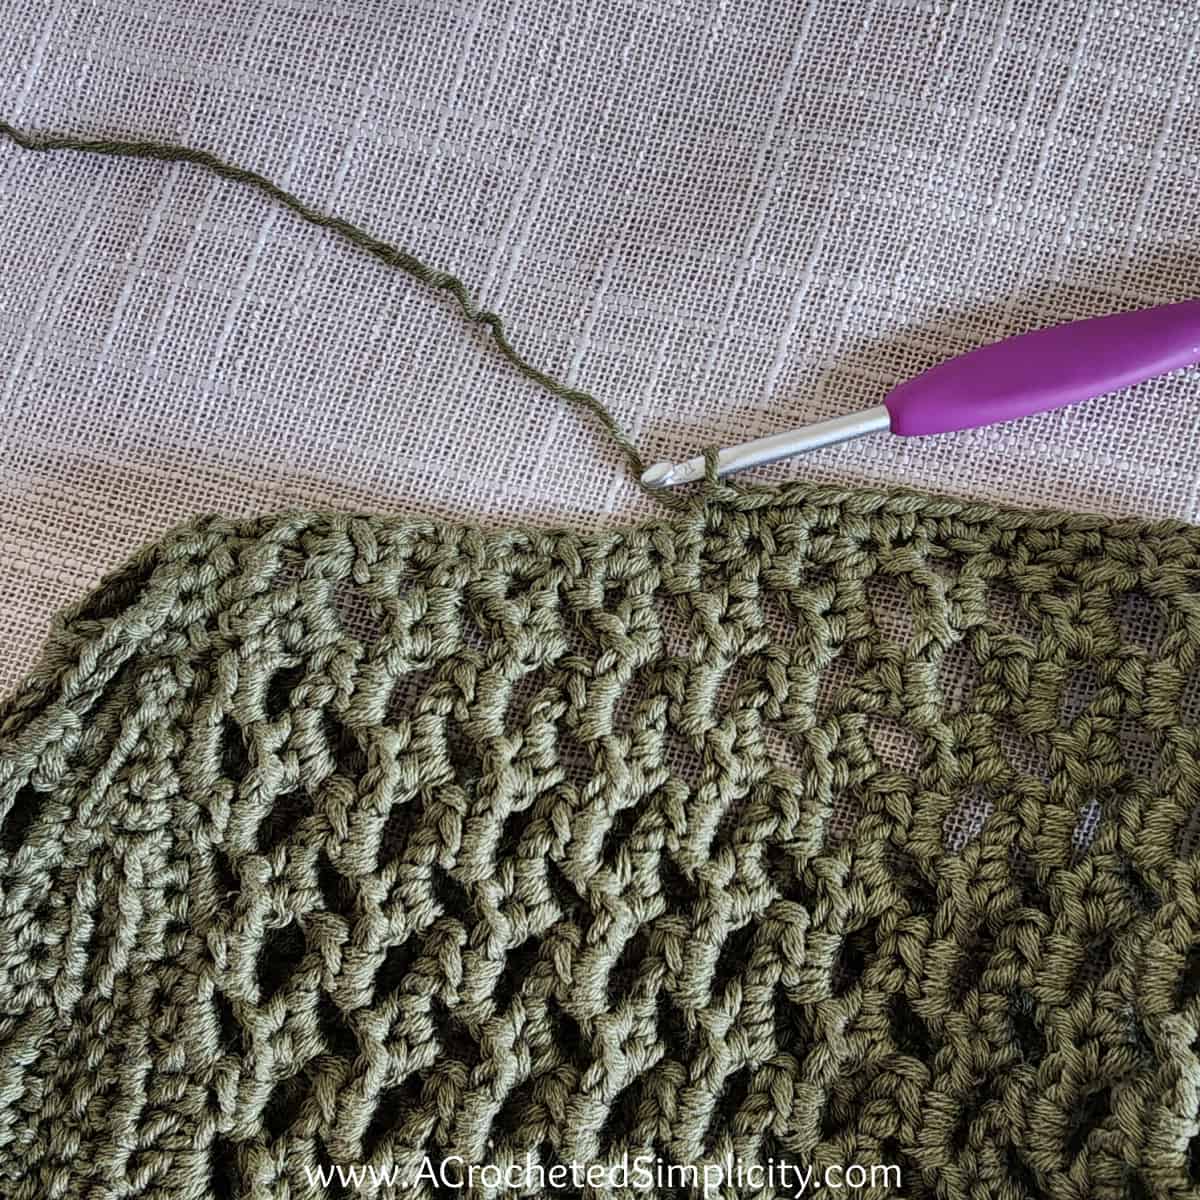 Purple crochet hook edging the armhole opening of a mesh crochet top.